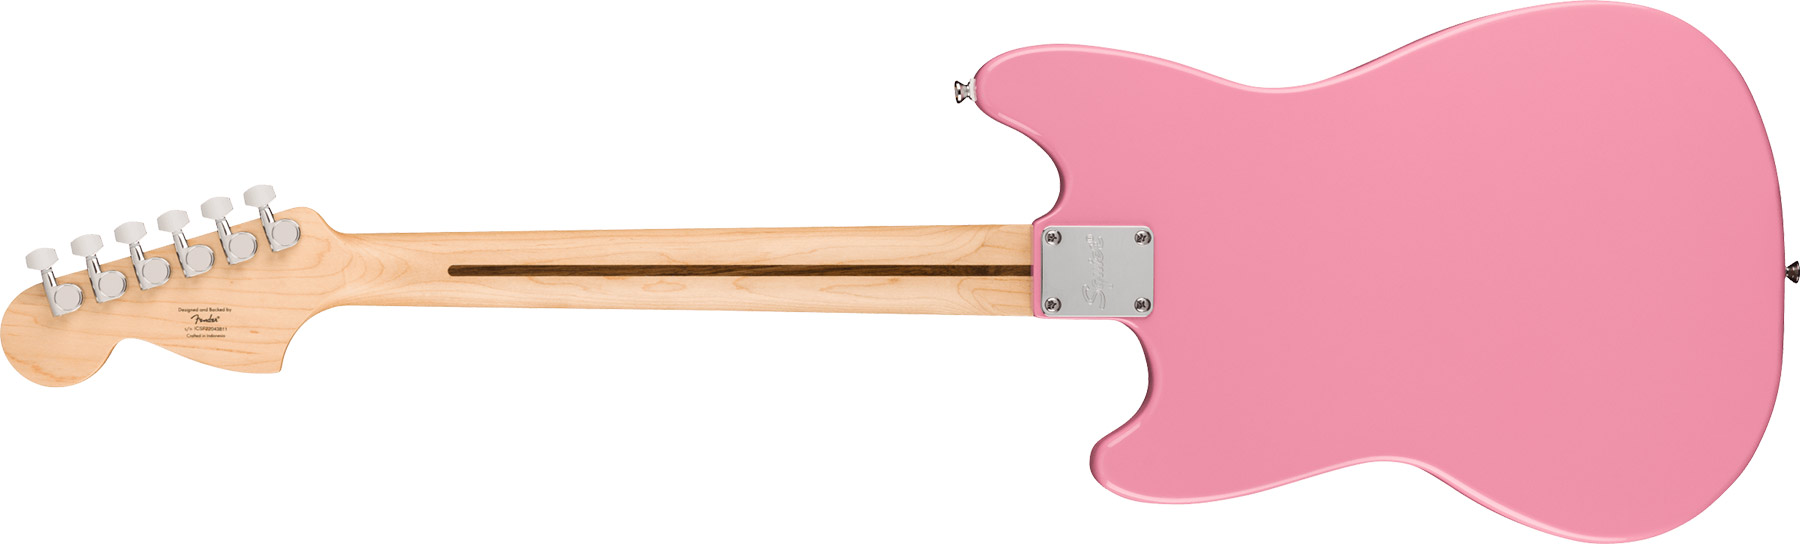 Squier Mustang Sonic Hh 2h Ht Mn - Flash Pink - Guitarra electrica retro rock - Variation 1